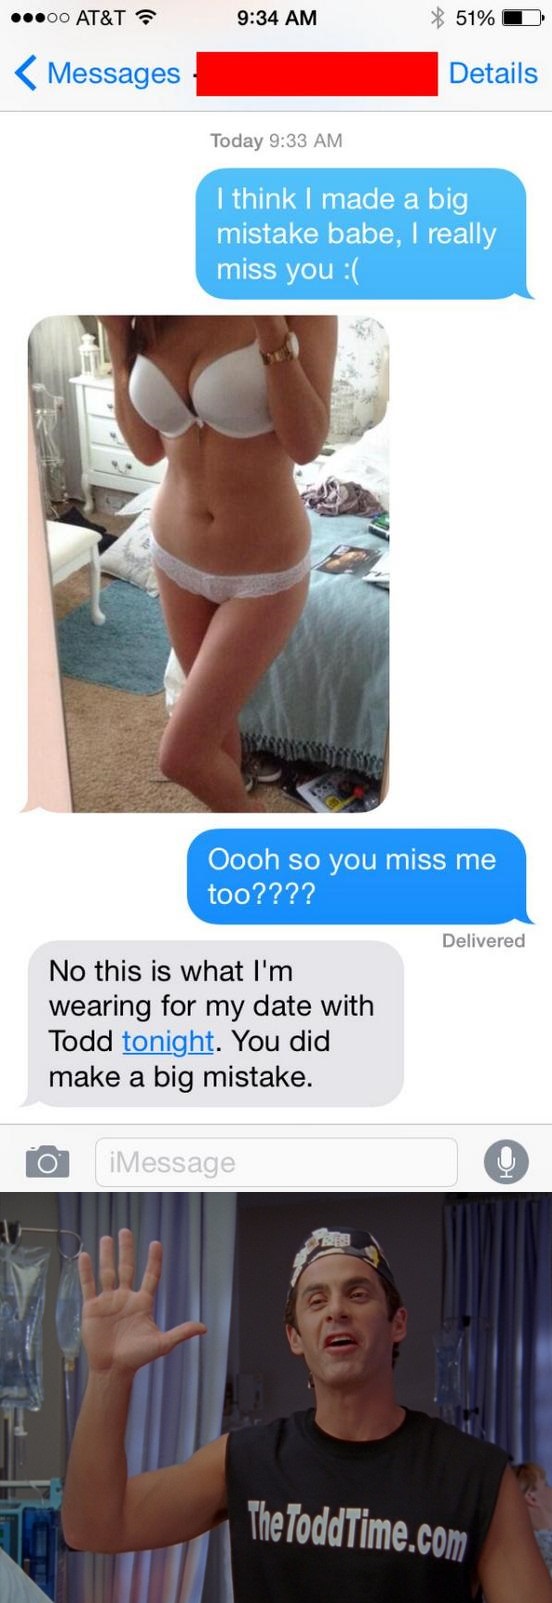 God damn Todd